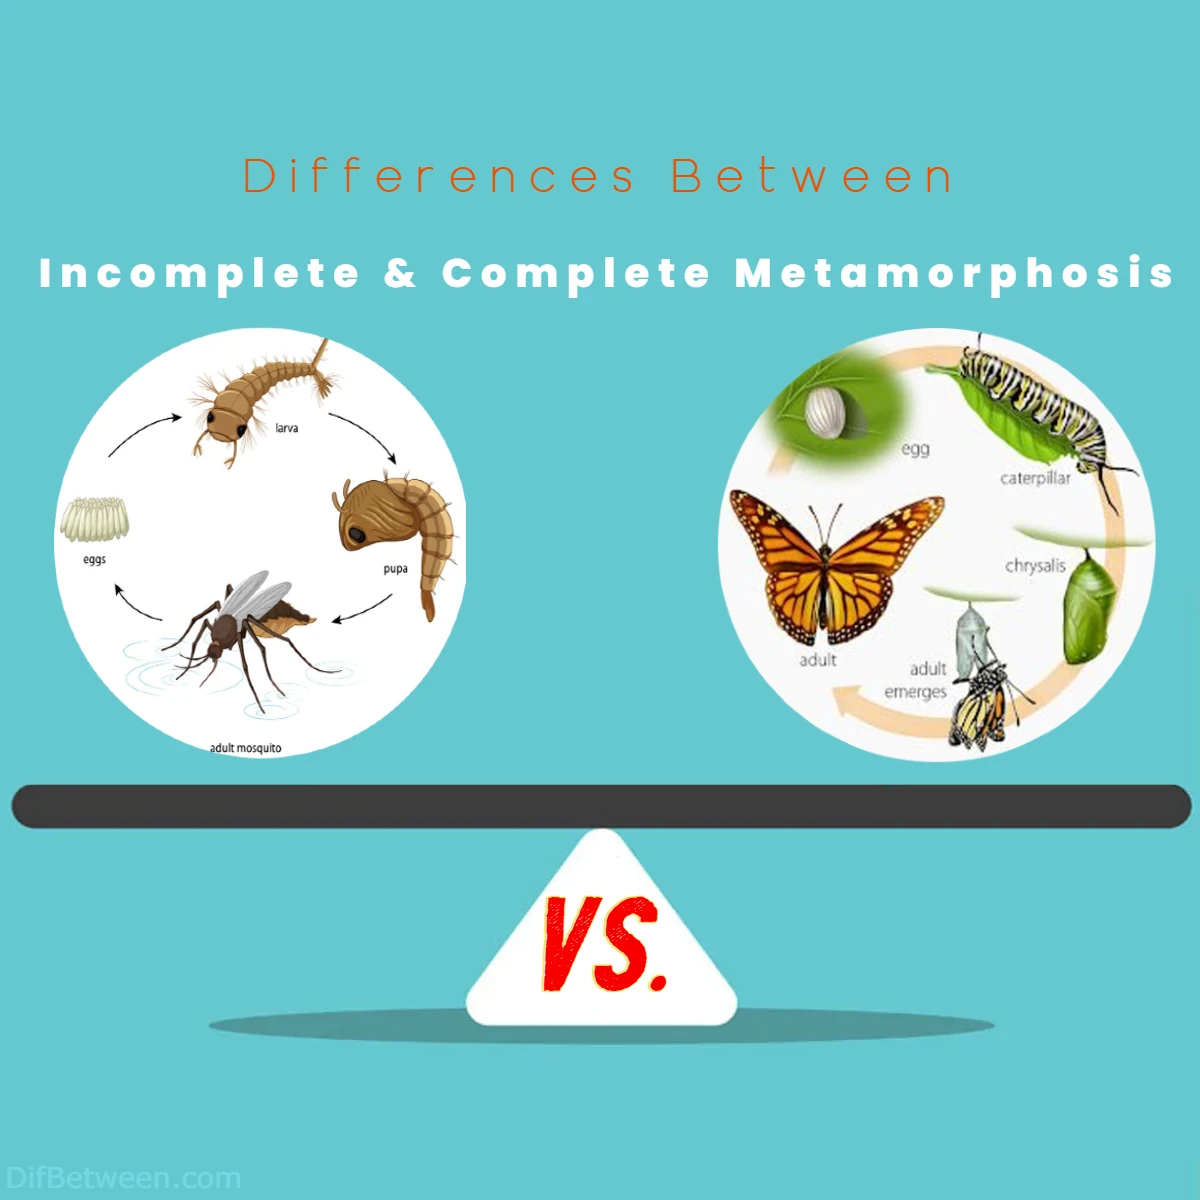 Differences Between Incomplete vs Complete Metamorphosis